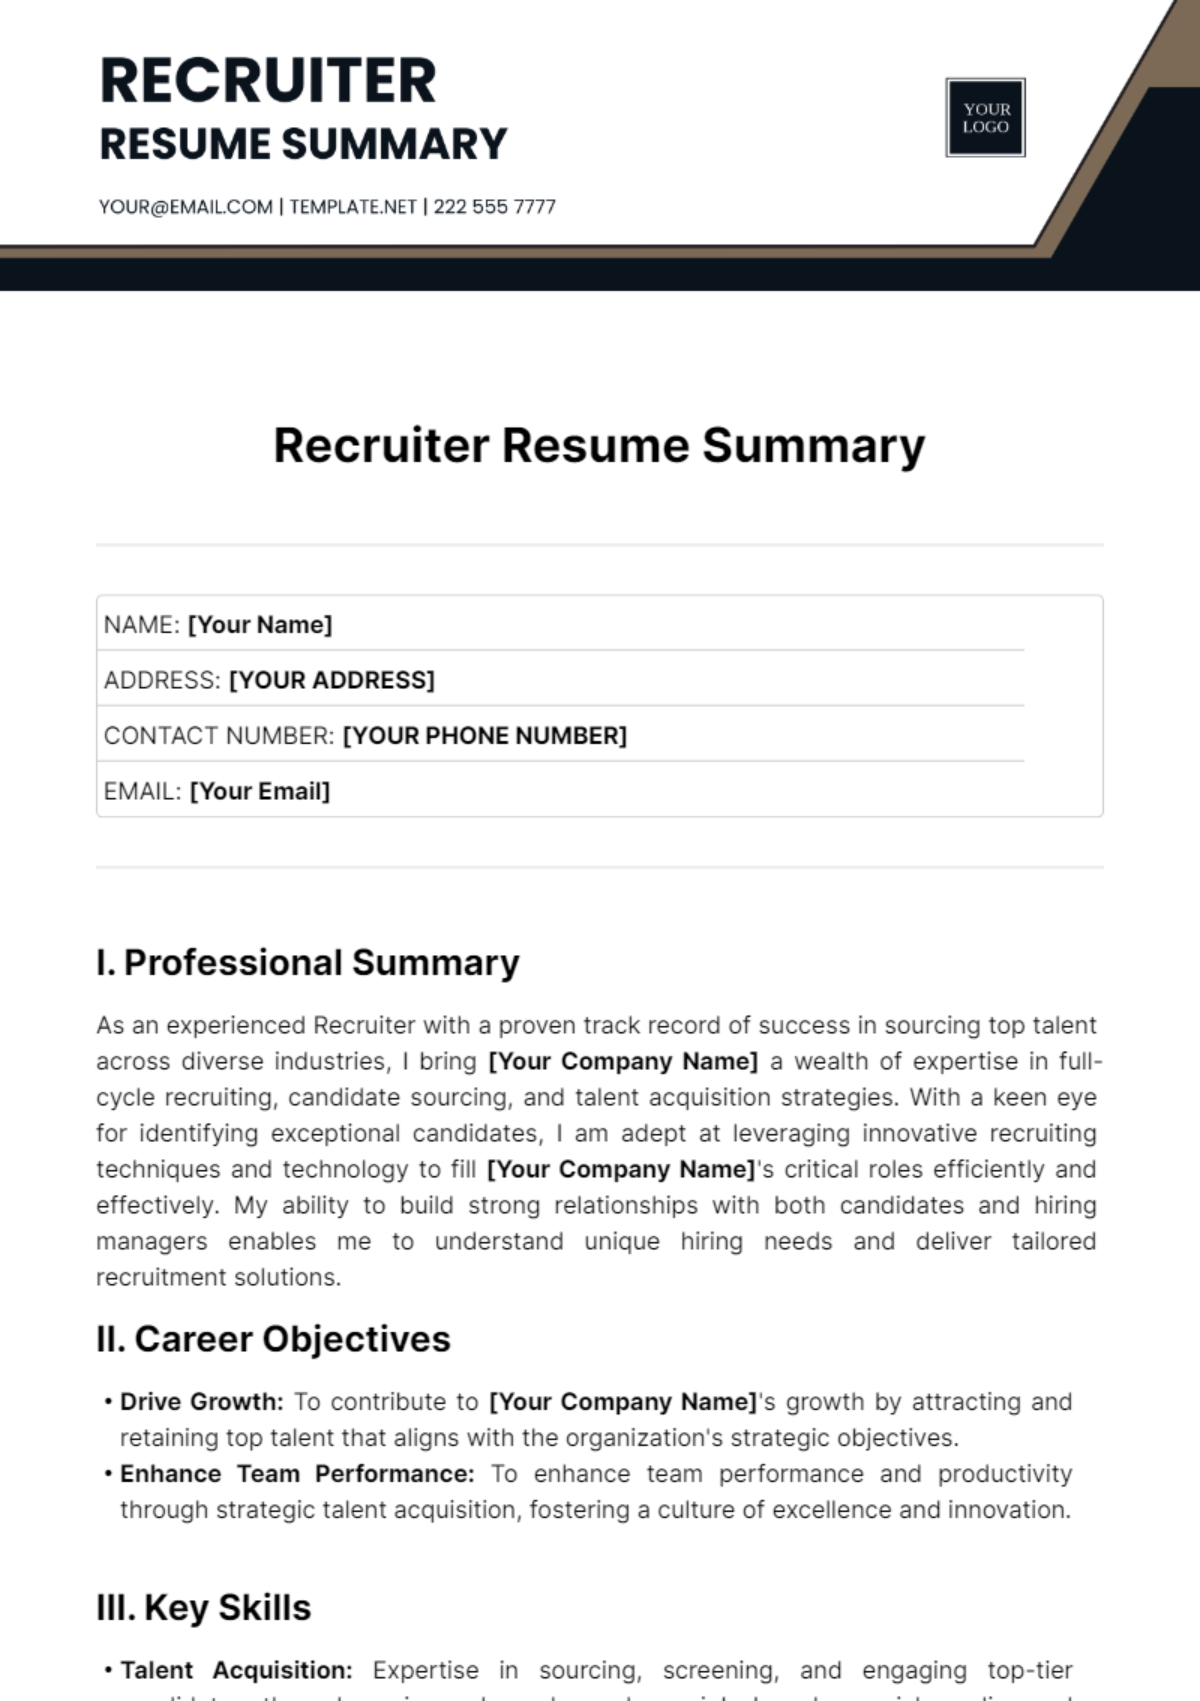 Free Recruiter Resume Summary Template